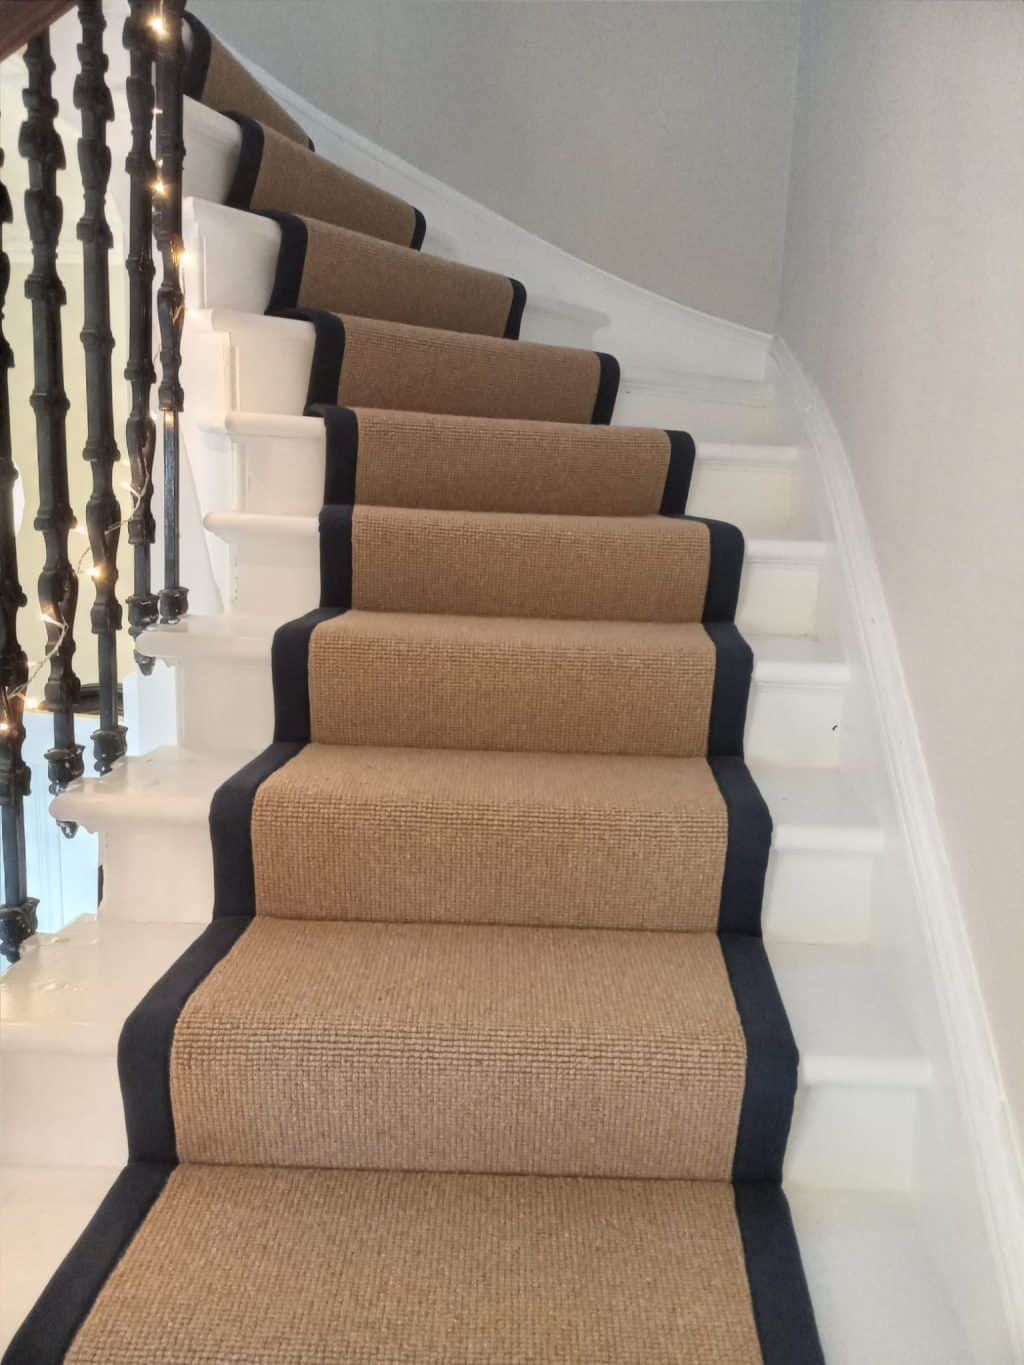 Stair Carpet Runner with black binding 